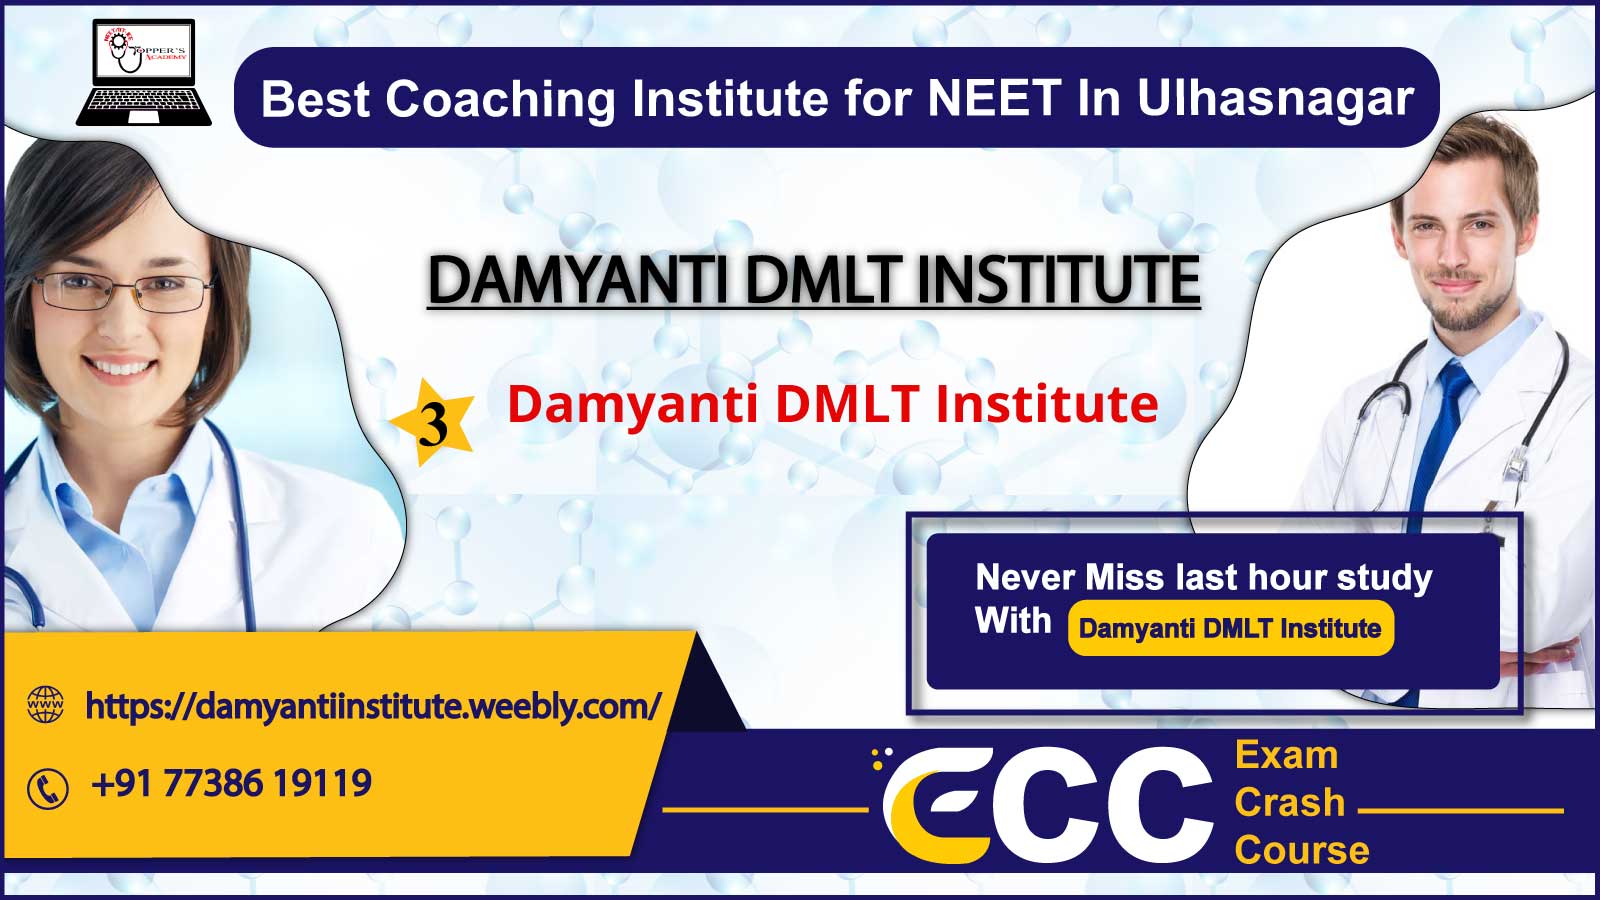 Damyanti DMLT Institute in Ulhasnagar